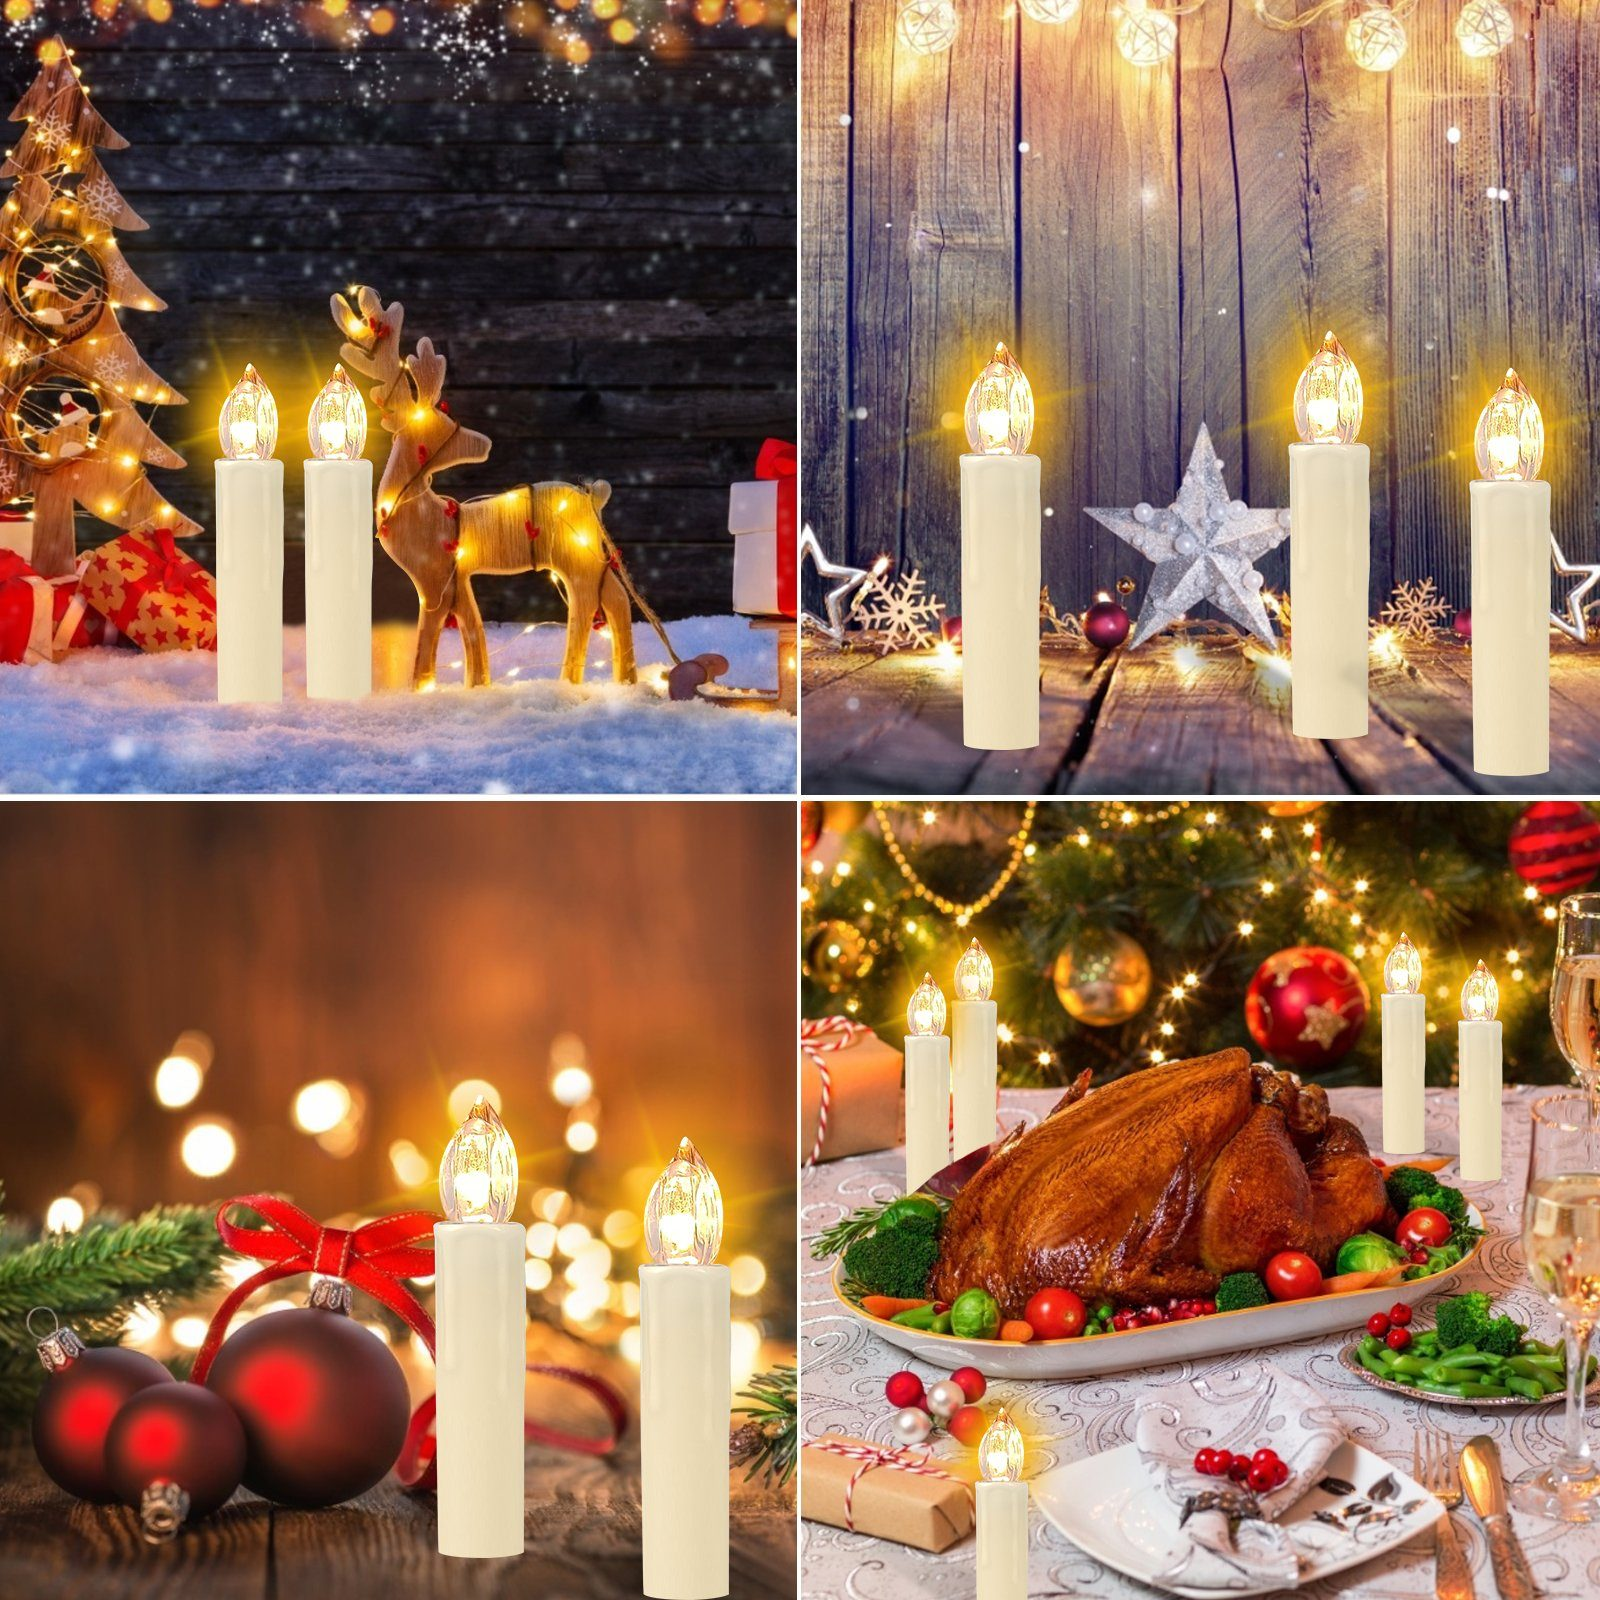 kabellose GOTOLL Weihnachtskerzen, Creme CH010-B Beige LED-Kerze 10 LED